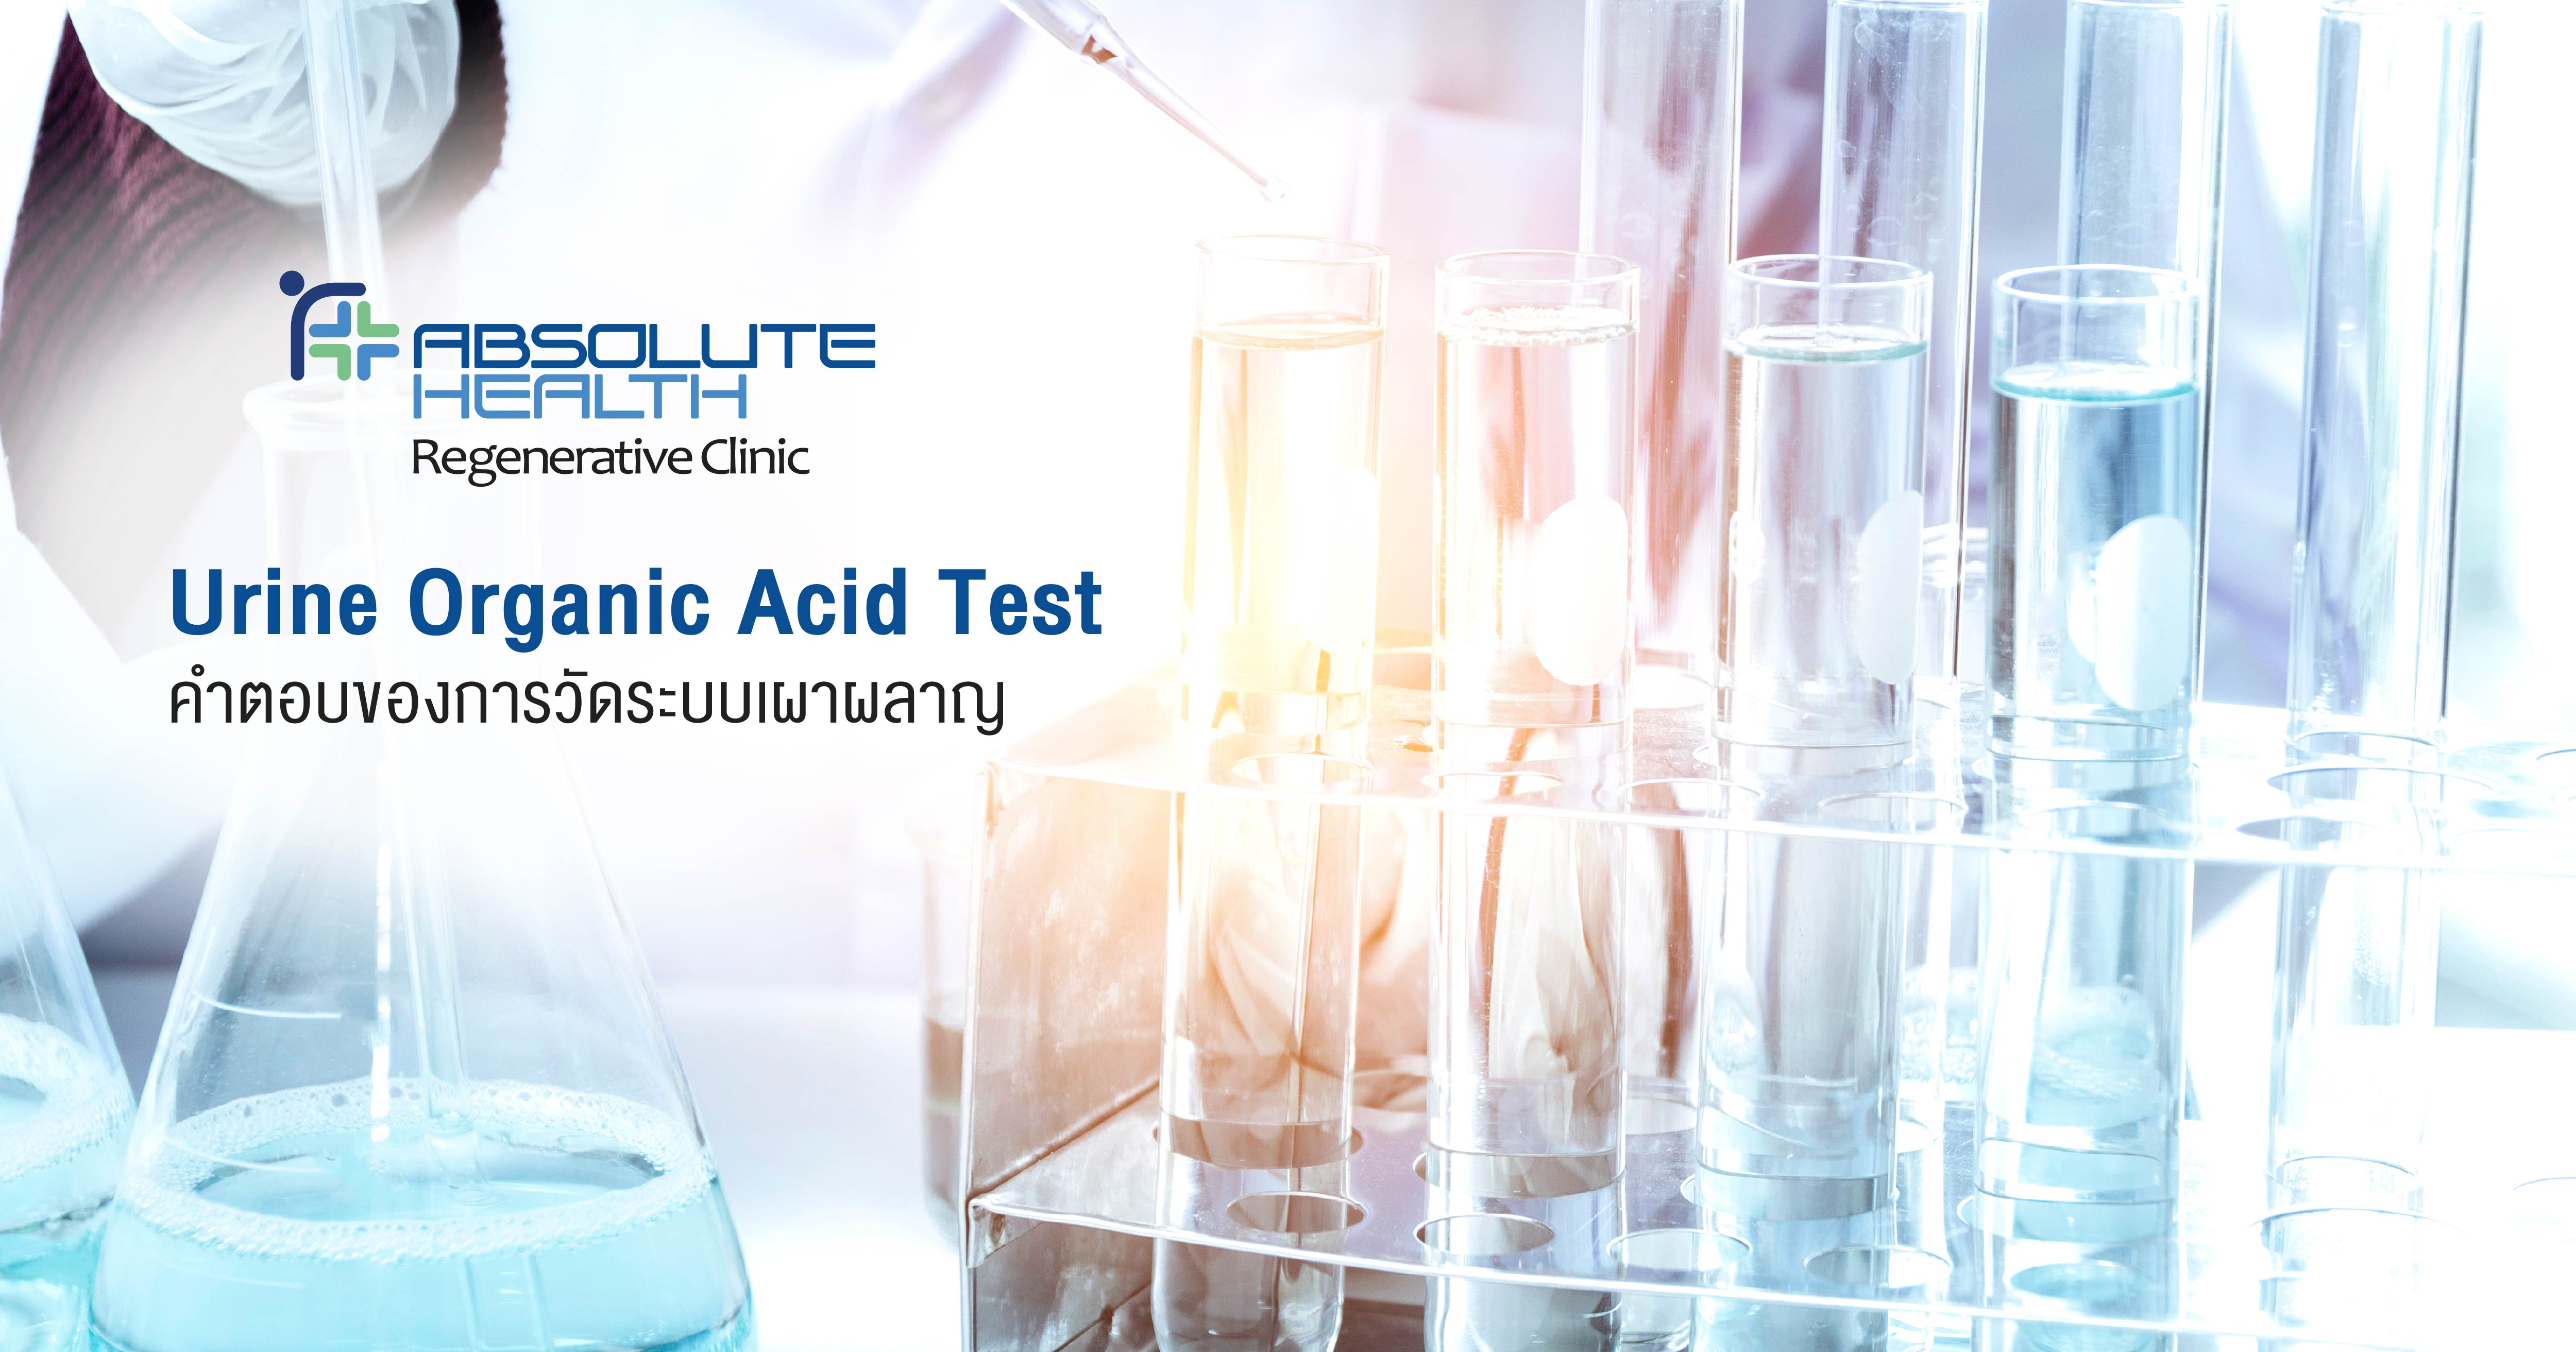 Urine organic acid test: The solution for metabolism test